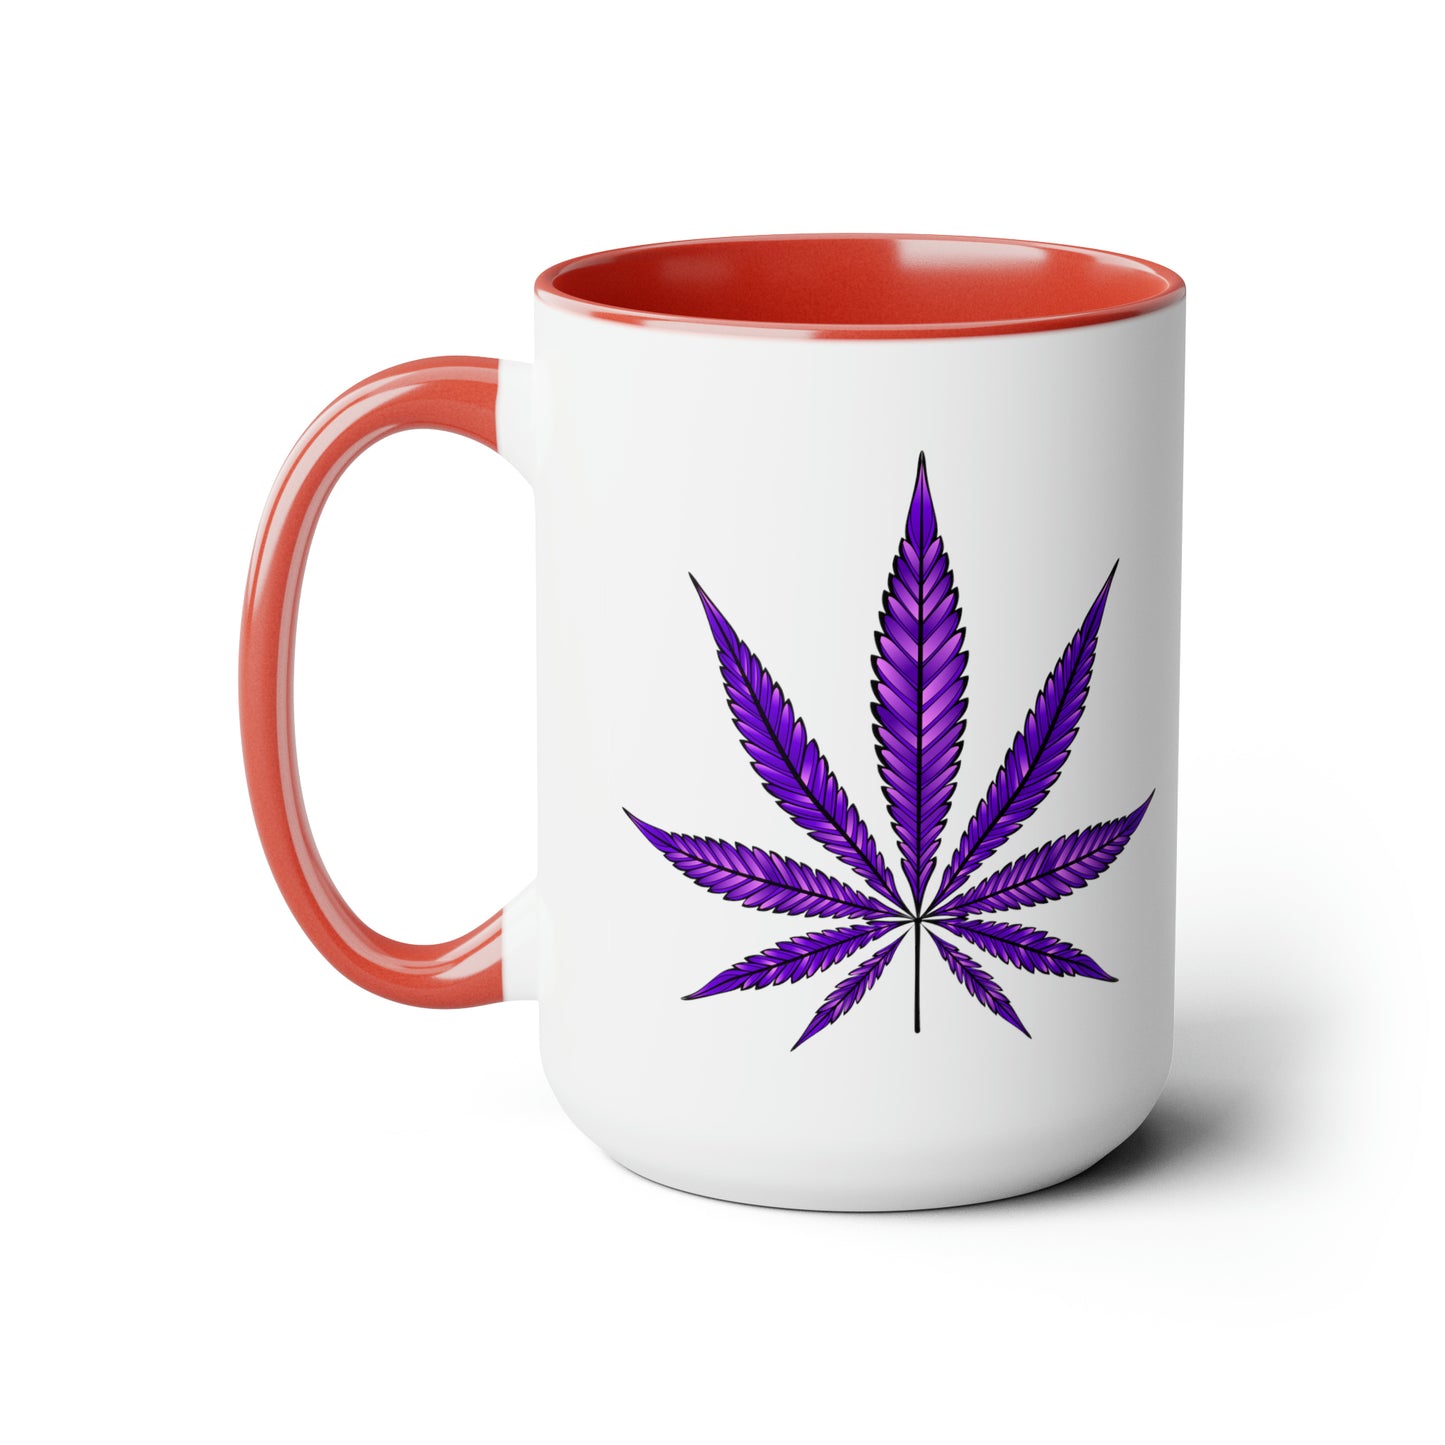 Purple Haze Marijuana Coffee Mug with a red interior and handle, featuring a Purple Haze Marijuana leaf design on the side, isolated on a white background.